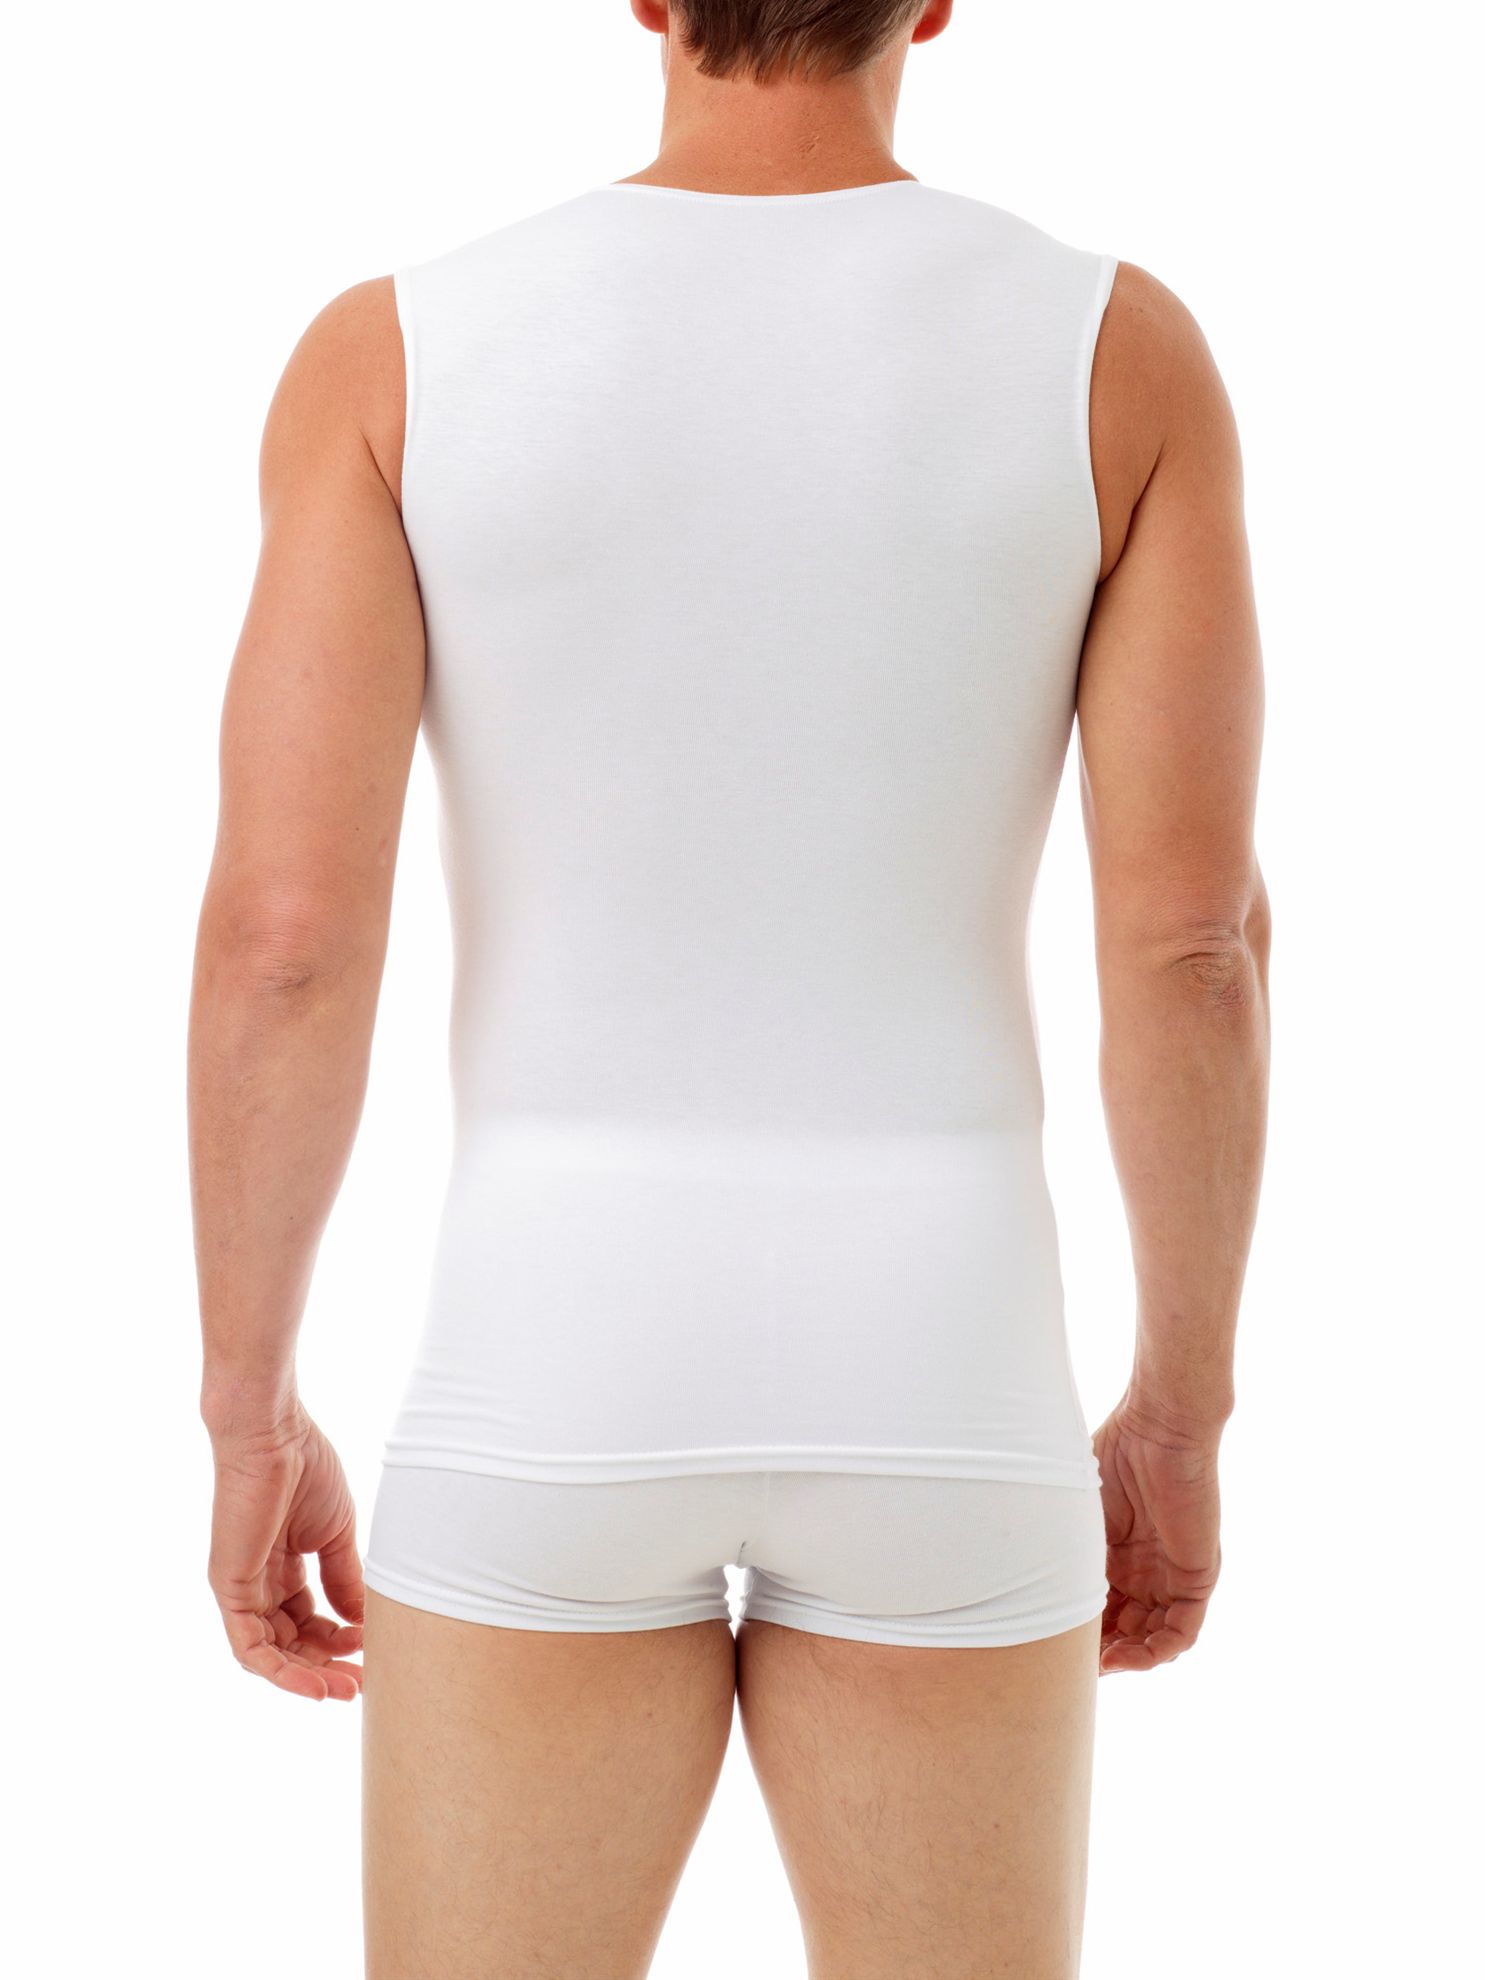 Underworks Womens Ultra Light Cotton Spandex Compression Tank - White - XS